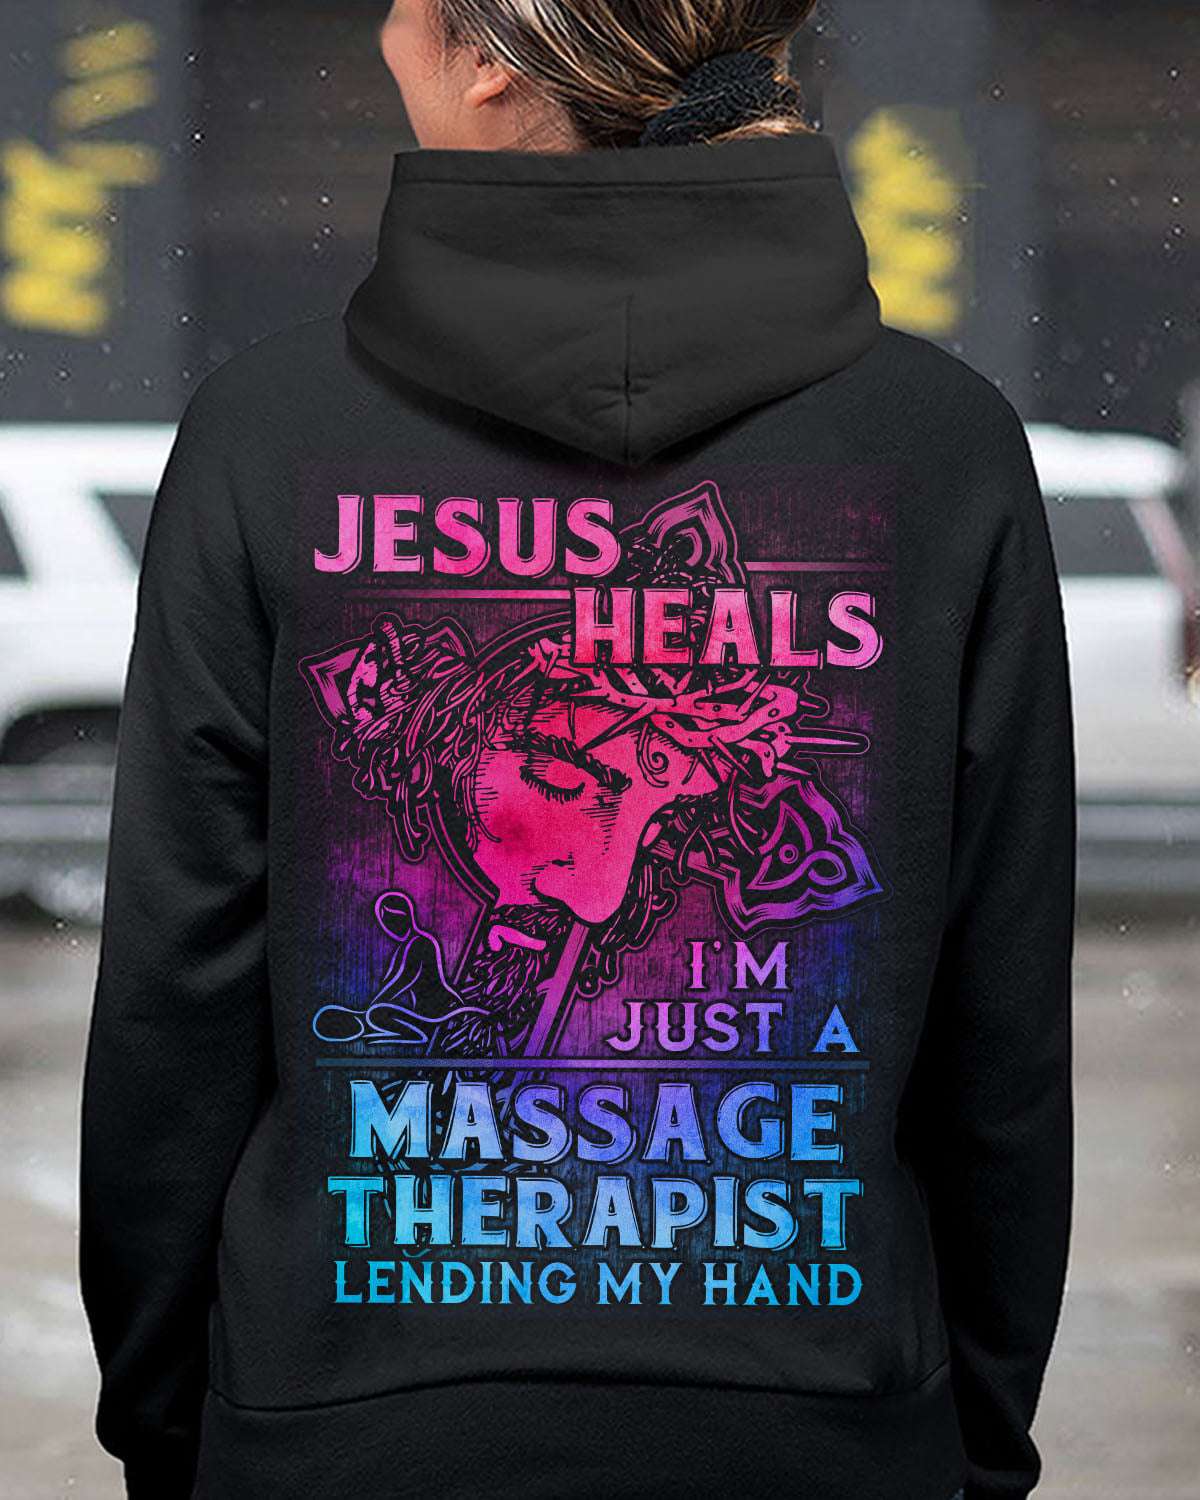 https://fridaystuff.com/wp-content/uploads/2021/09/Jesus-heals-Im-just-a-massage-therapist-leading-my-hand-Massage-therapist-the-job.jpg